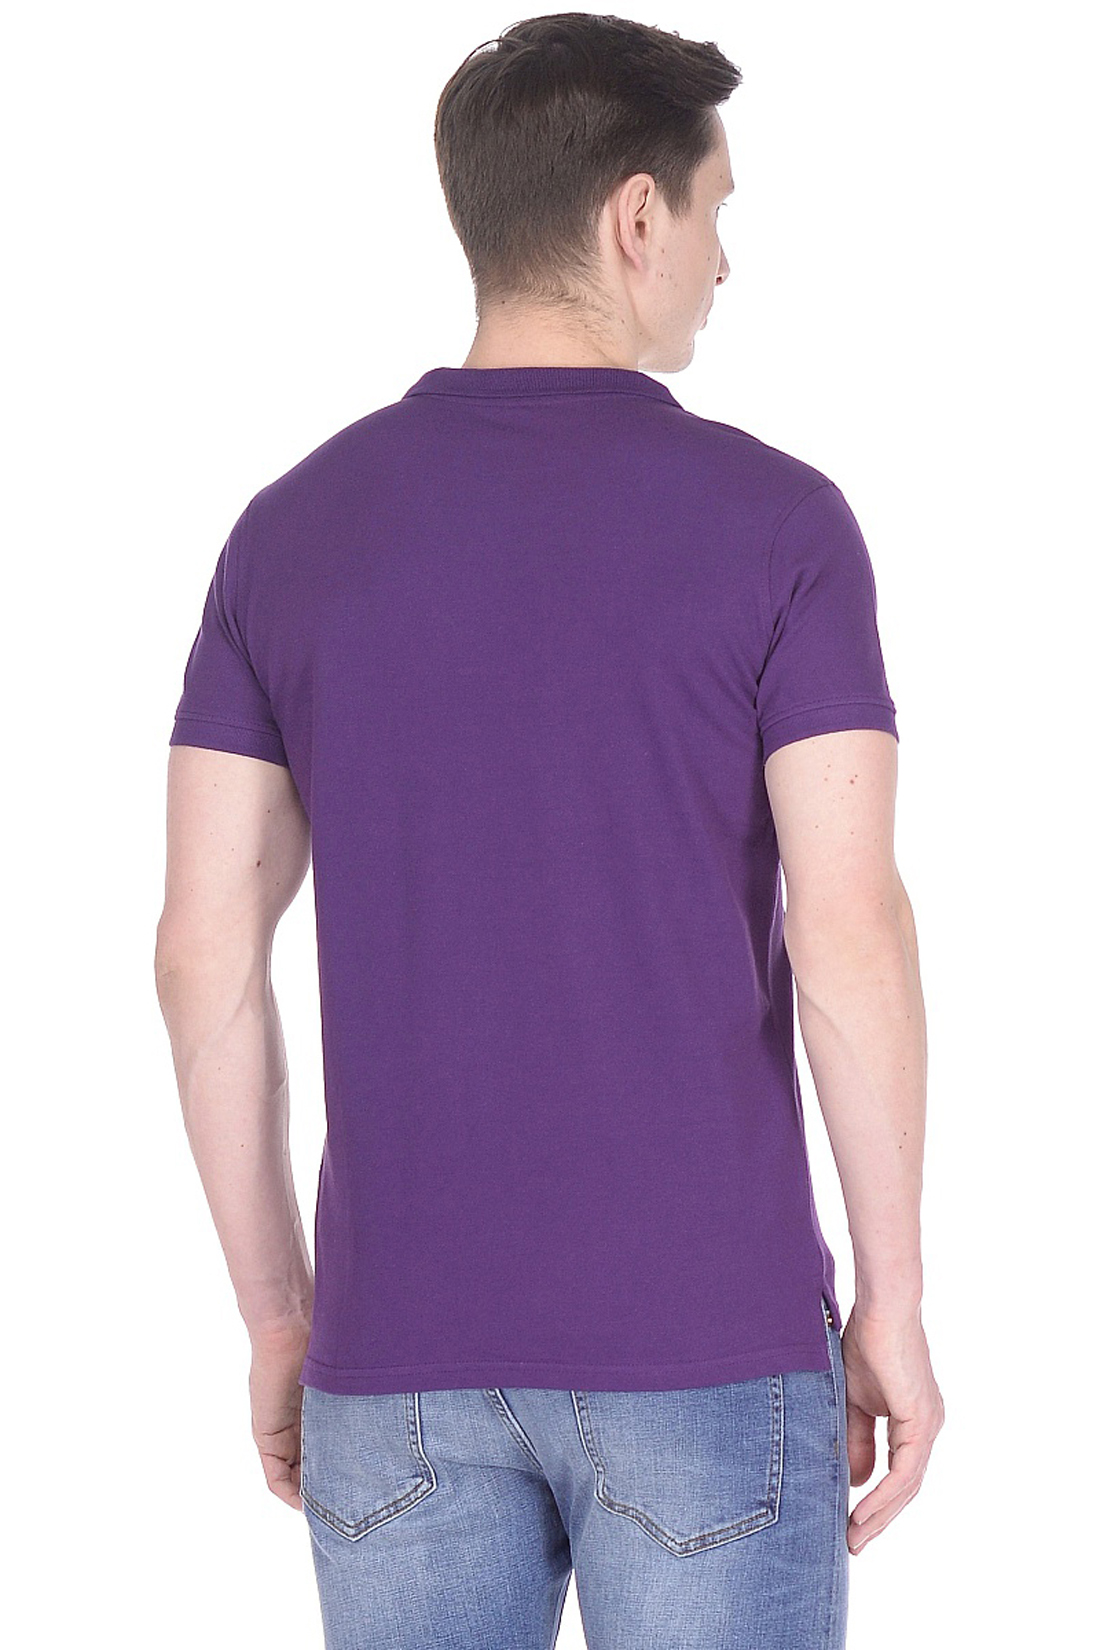 Базовое поло (арт. baon B708203), размер 3XL, цвет фиолетовый Базовое поло (арт. baon B708203) - фото 2